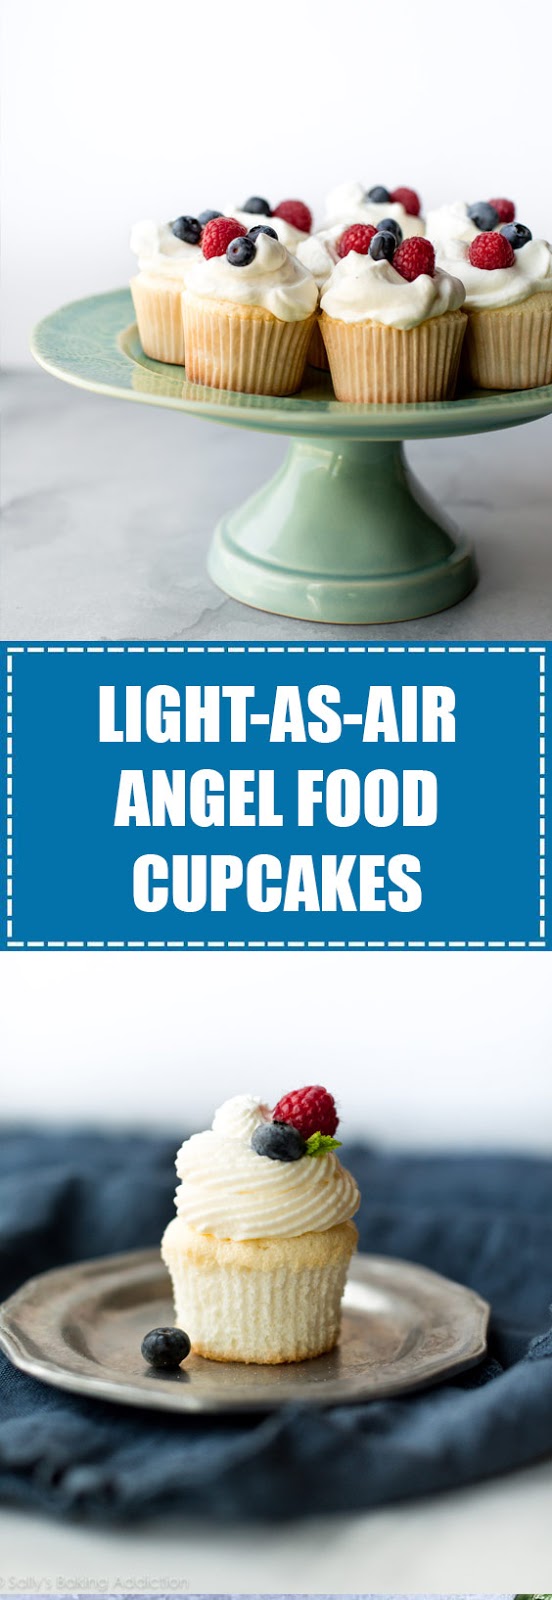 Light as Air Angel Food Cupcakes